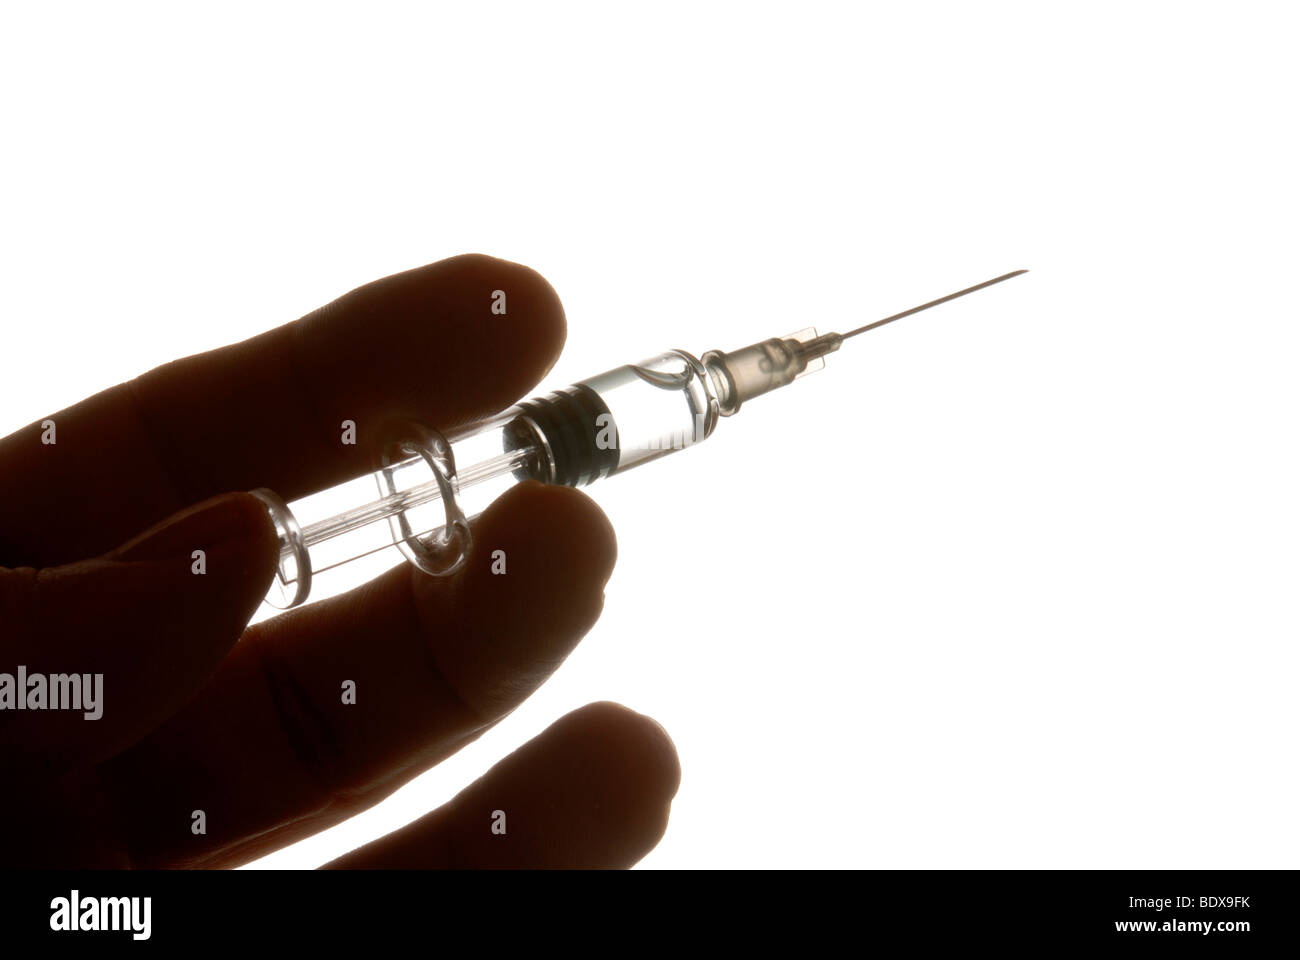 Hand with syringe, symbolic image for flu vaccination Stock Photo